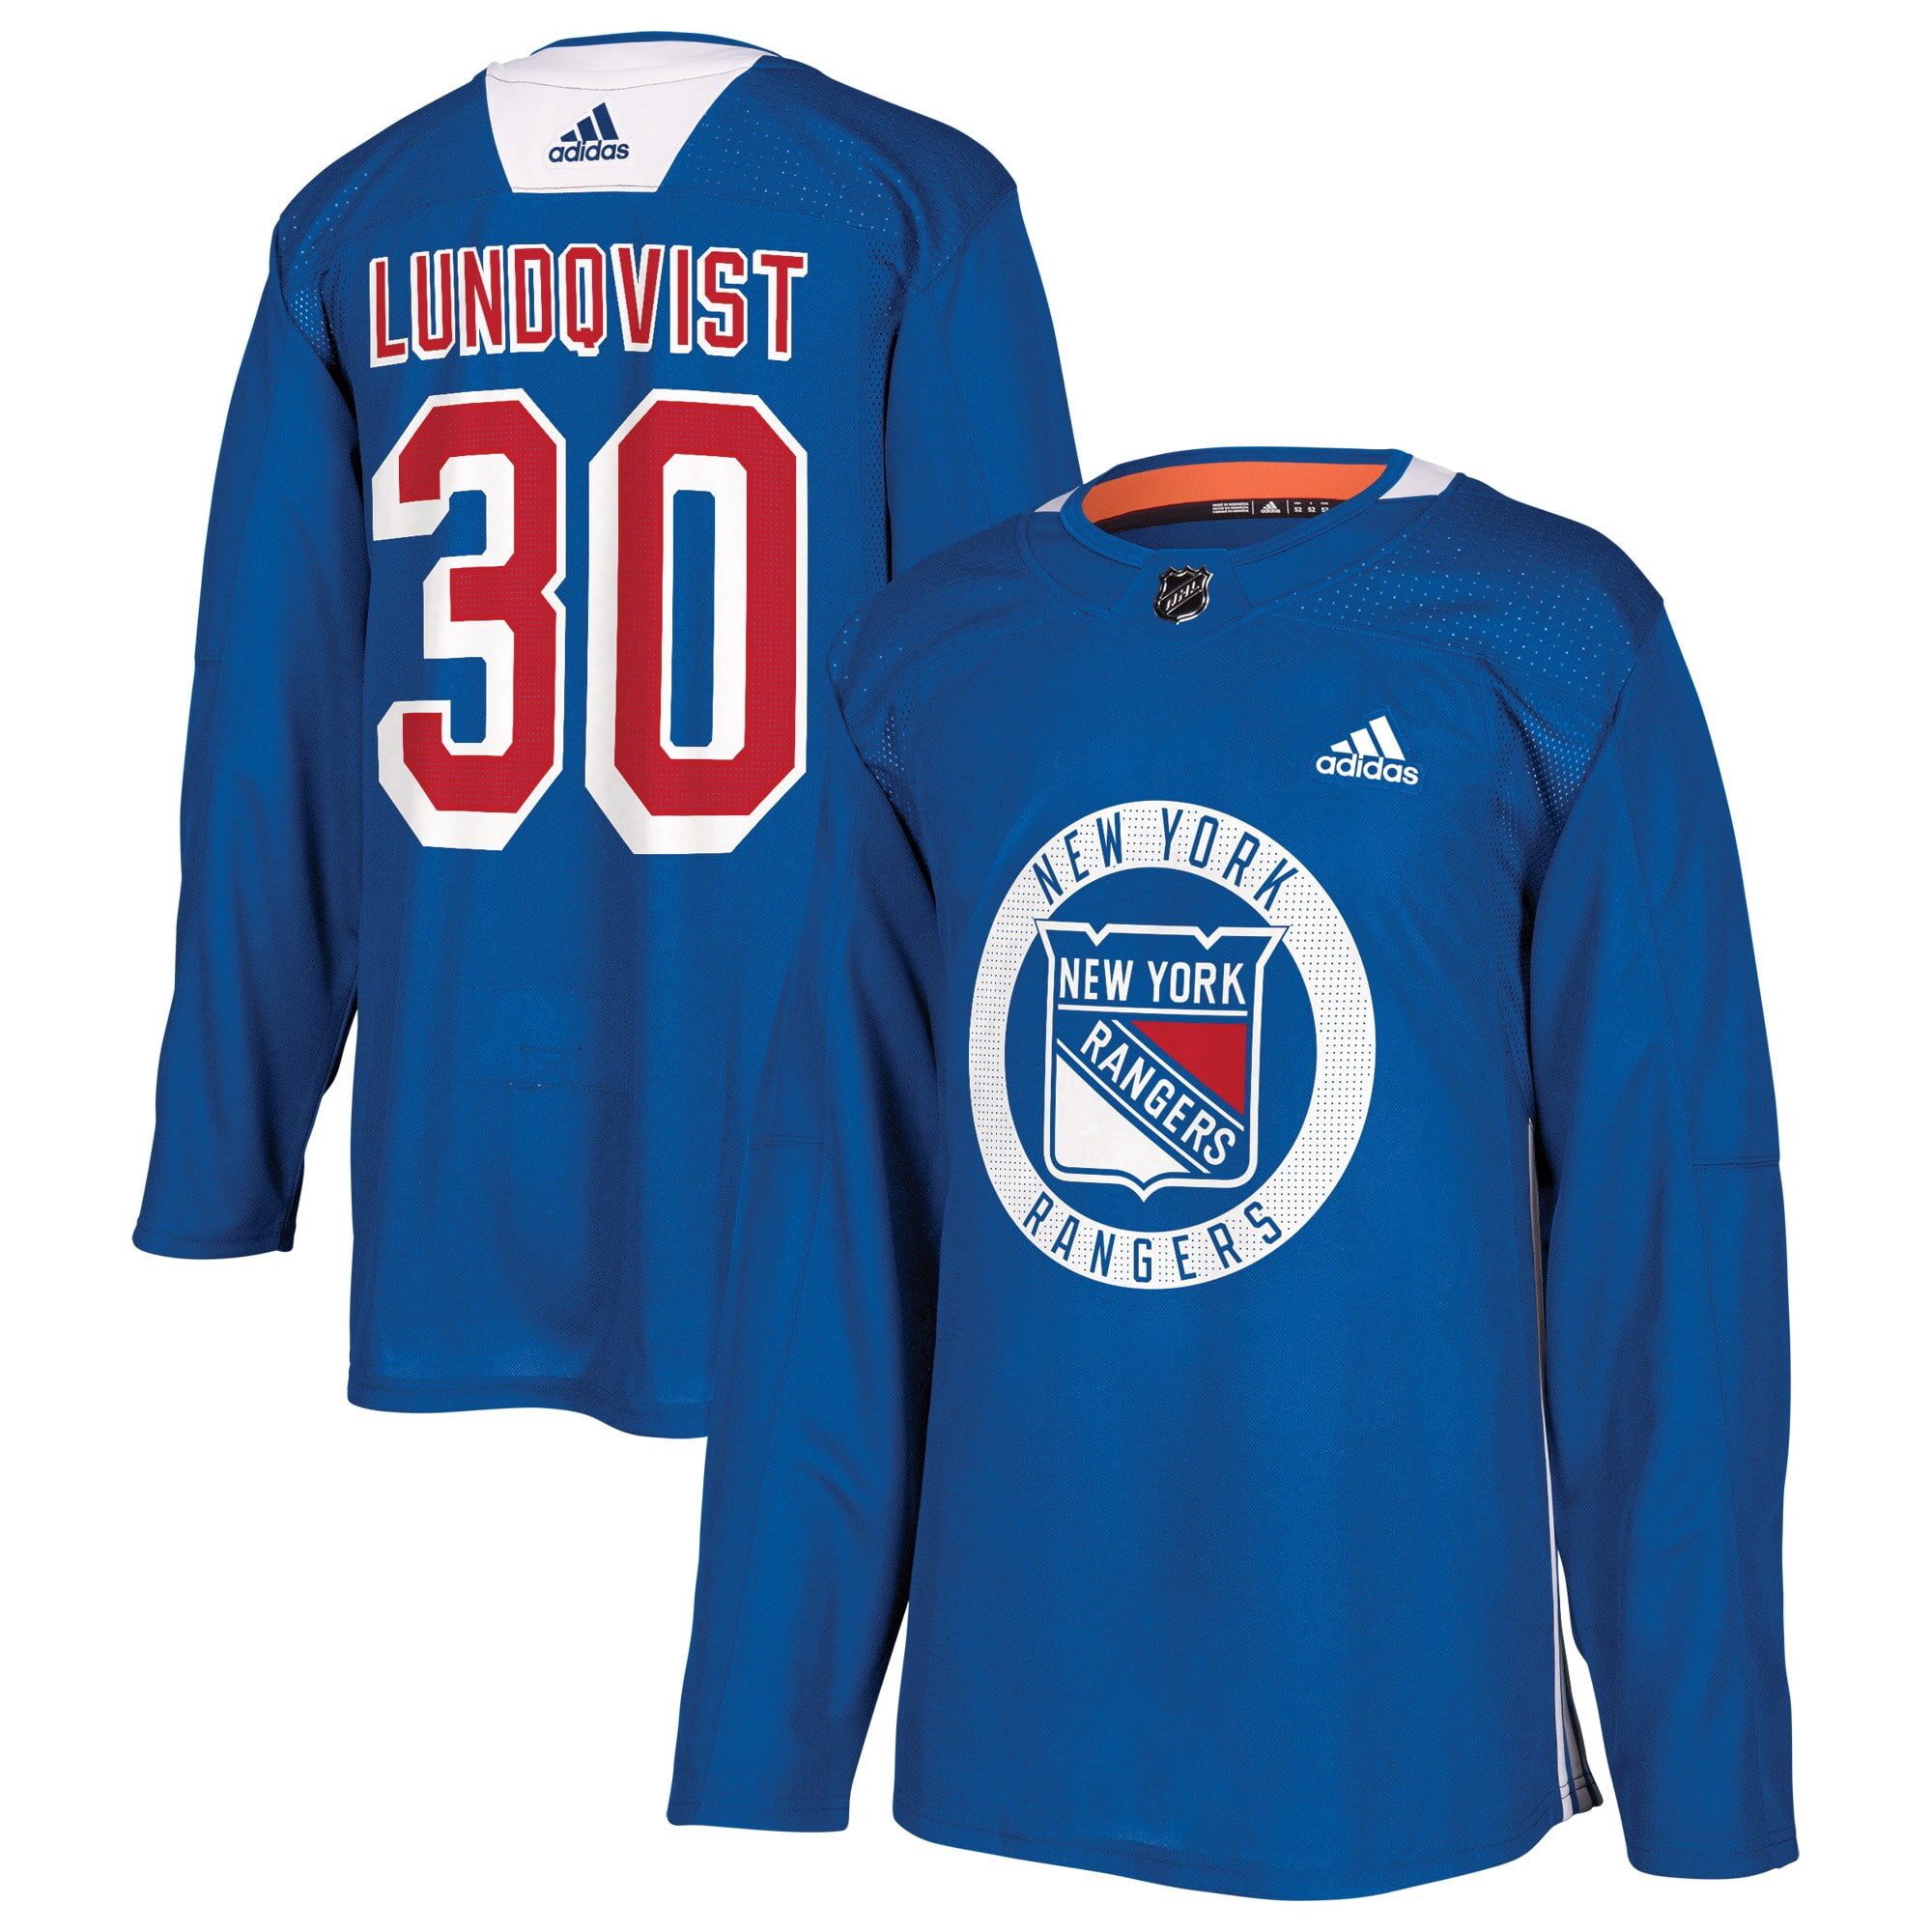 Henrik Lundqvist New York Rangers Authentic Adidas Blue Jersey